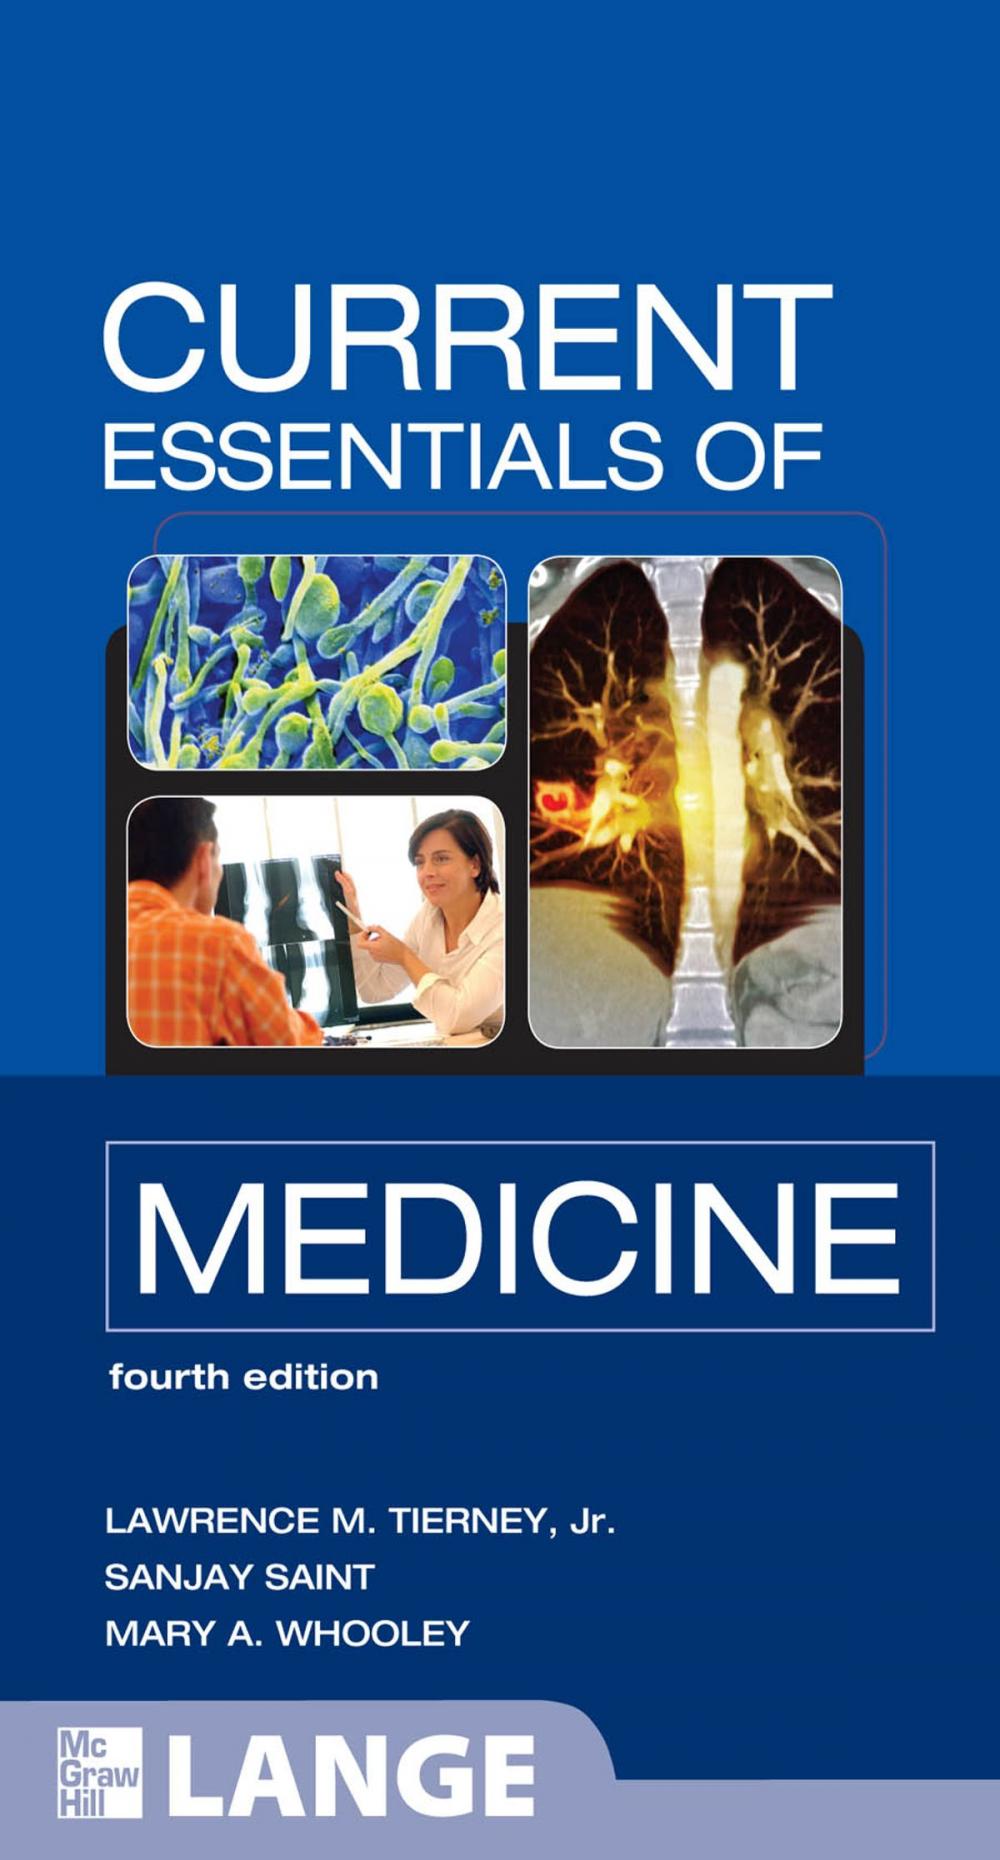 Big bigCover of CURRENT Essentials of Medicine, Fourth Edition